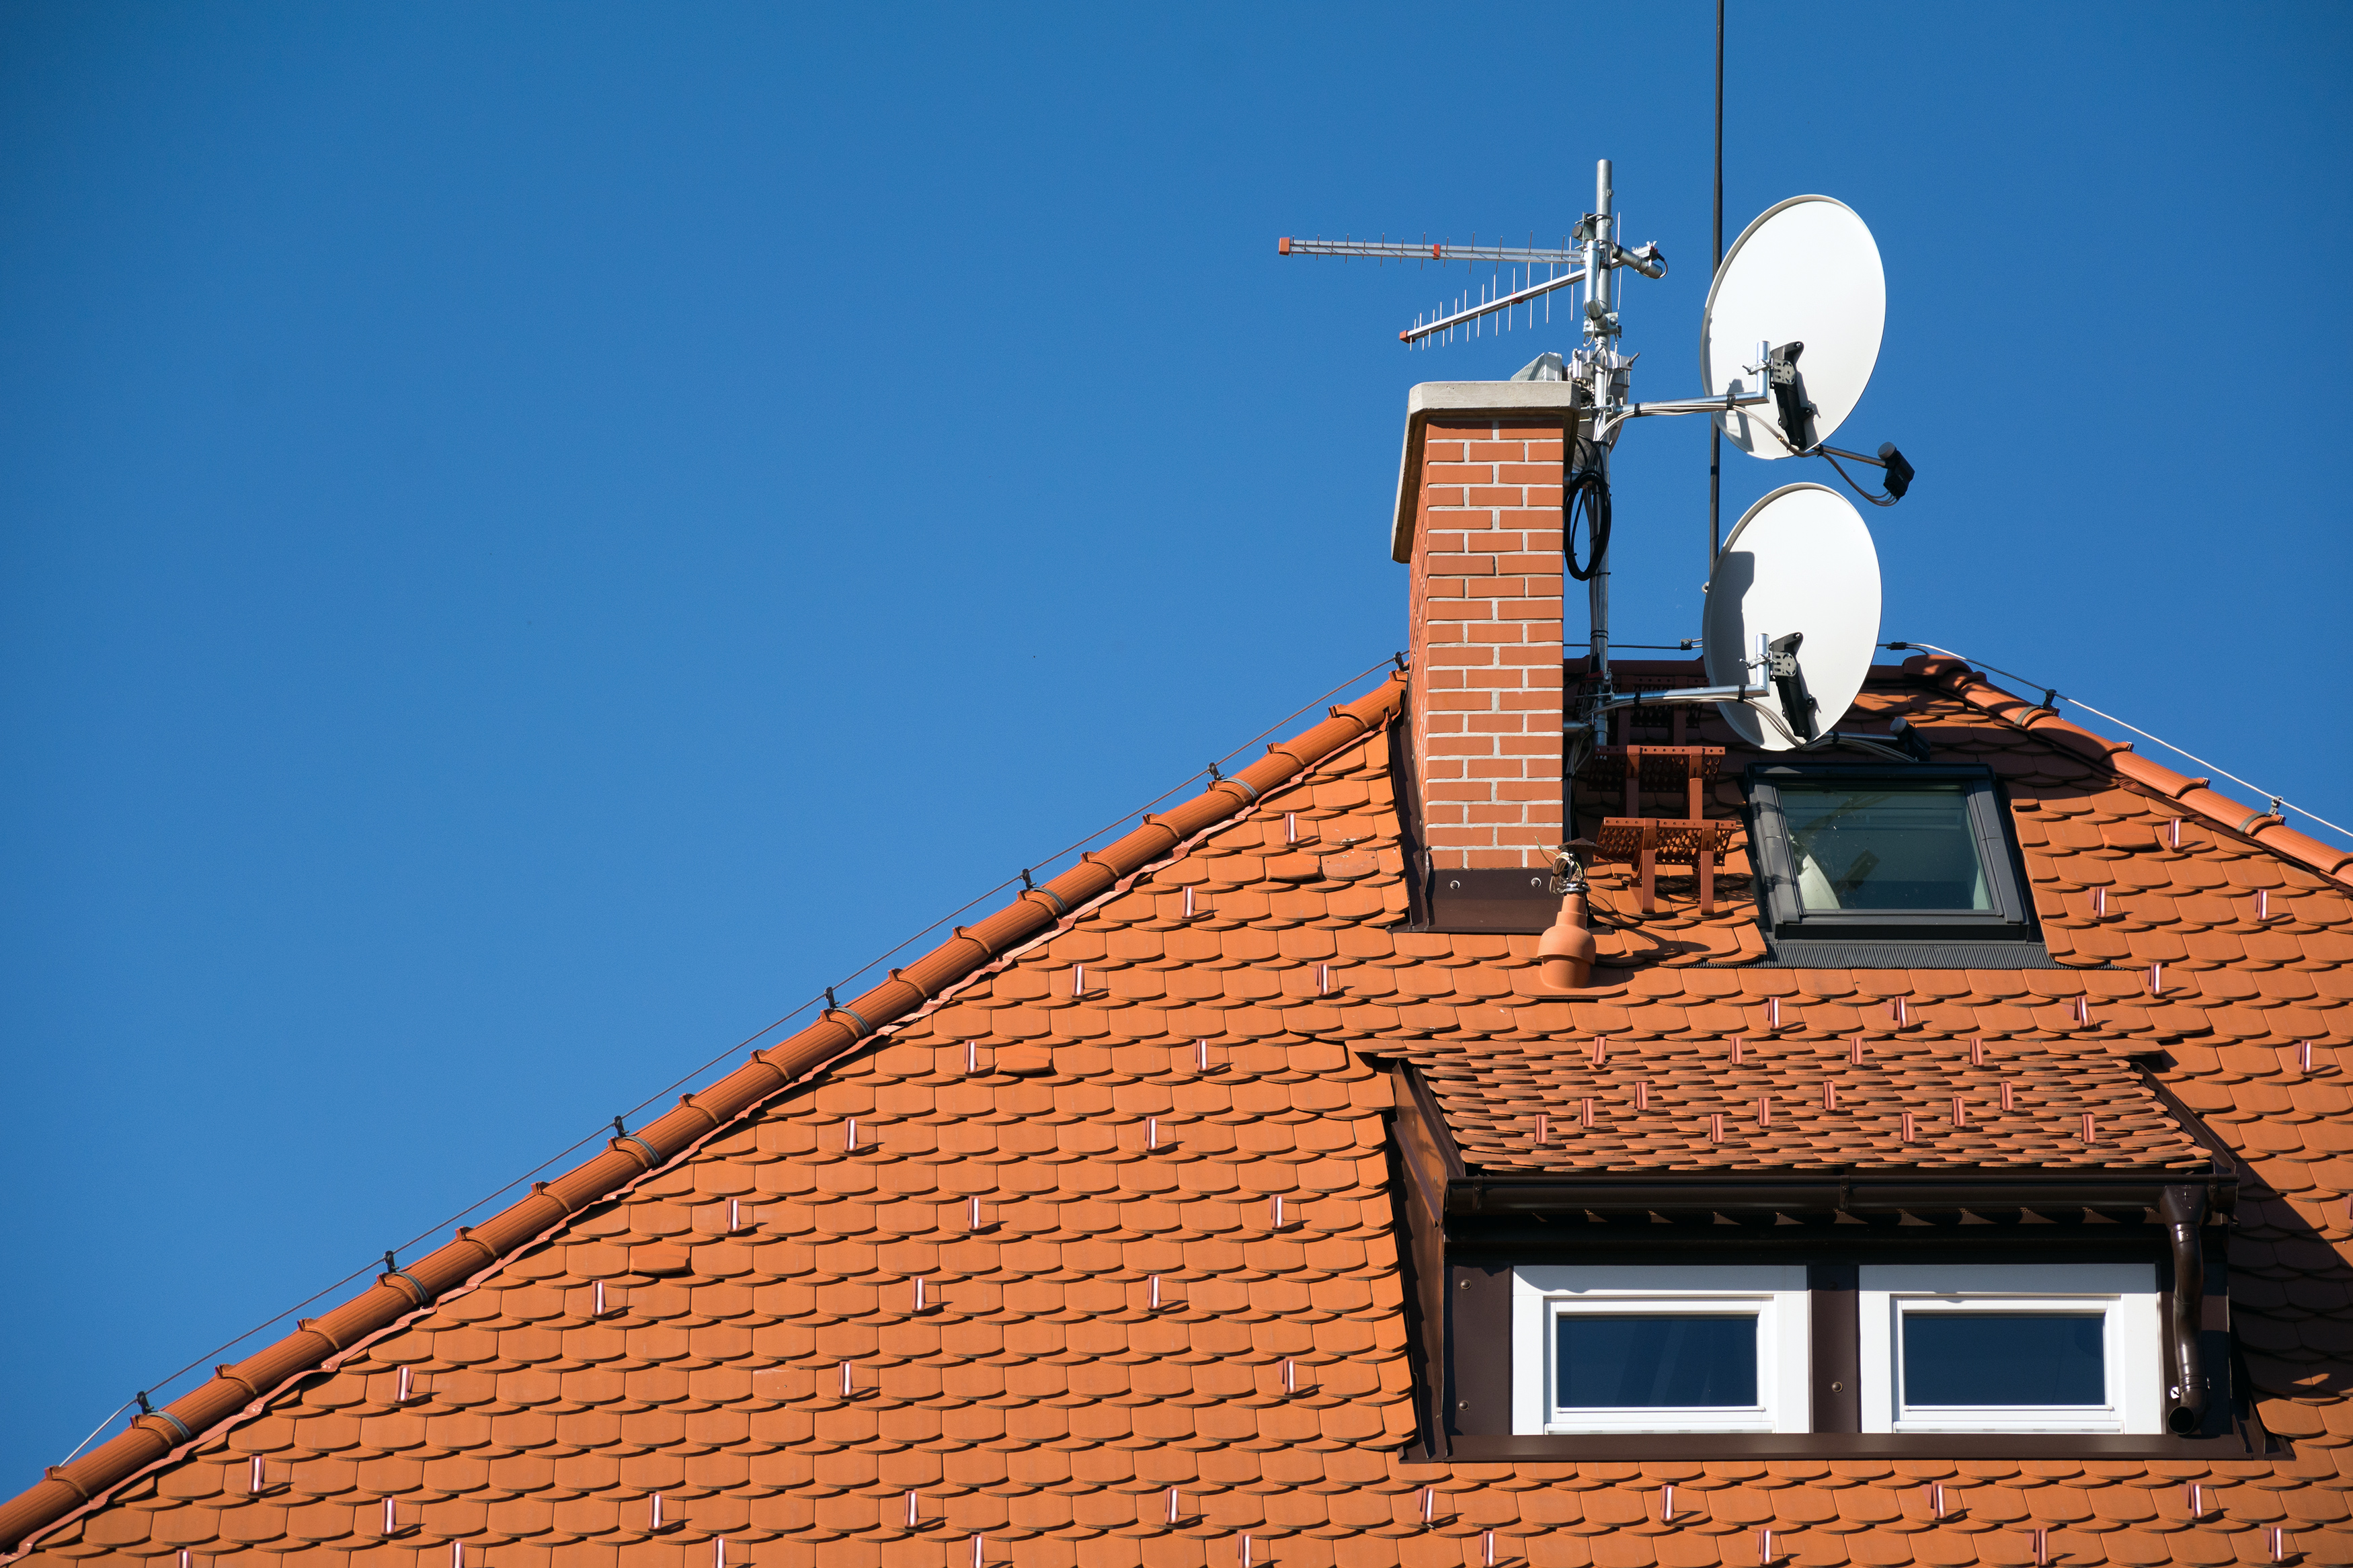 satellite antenna dish on the roof